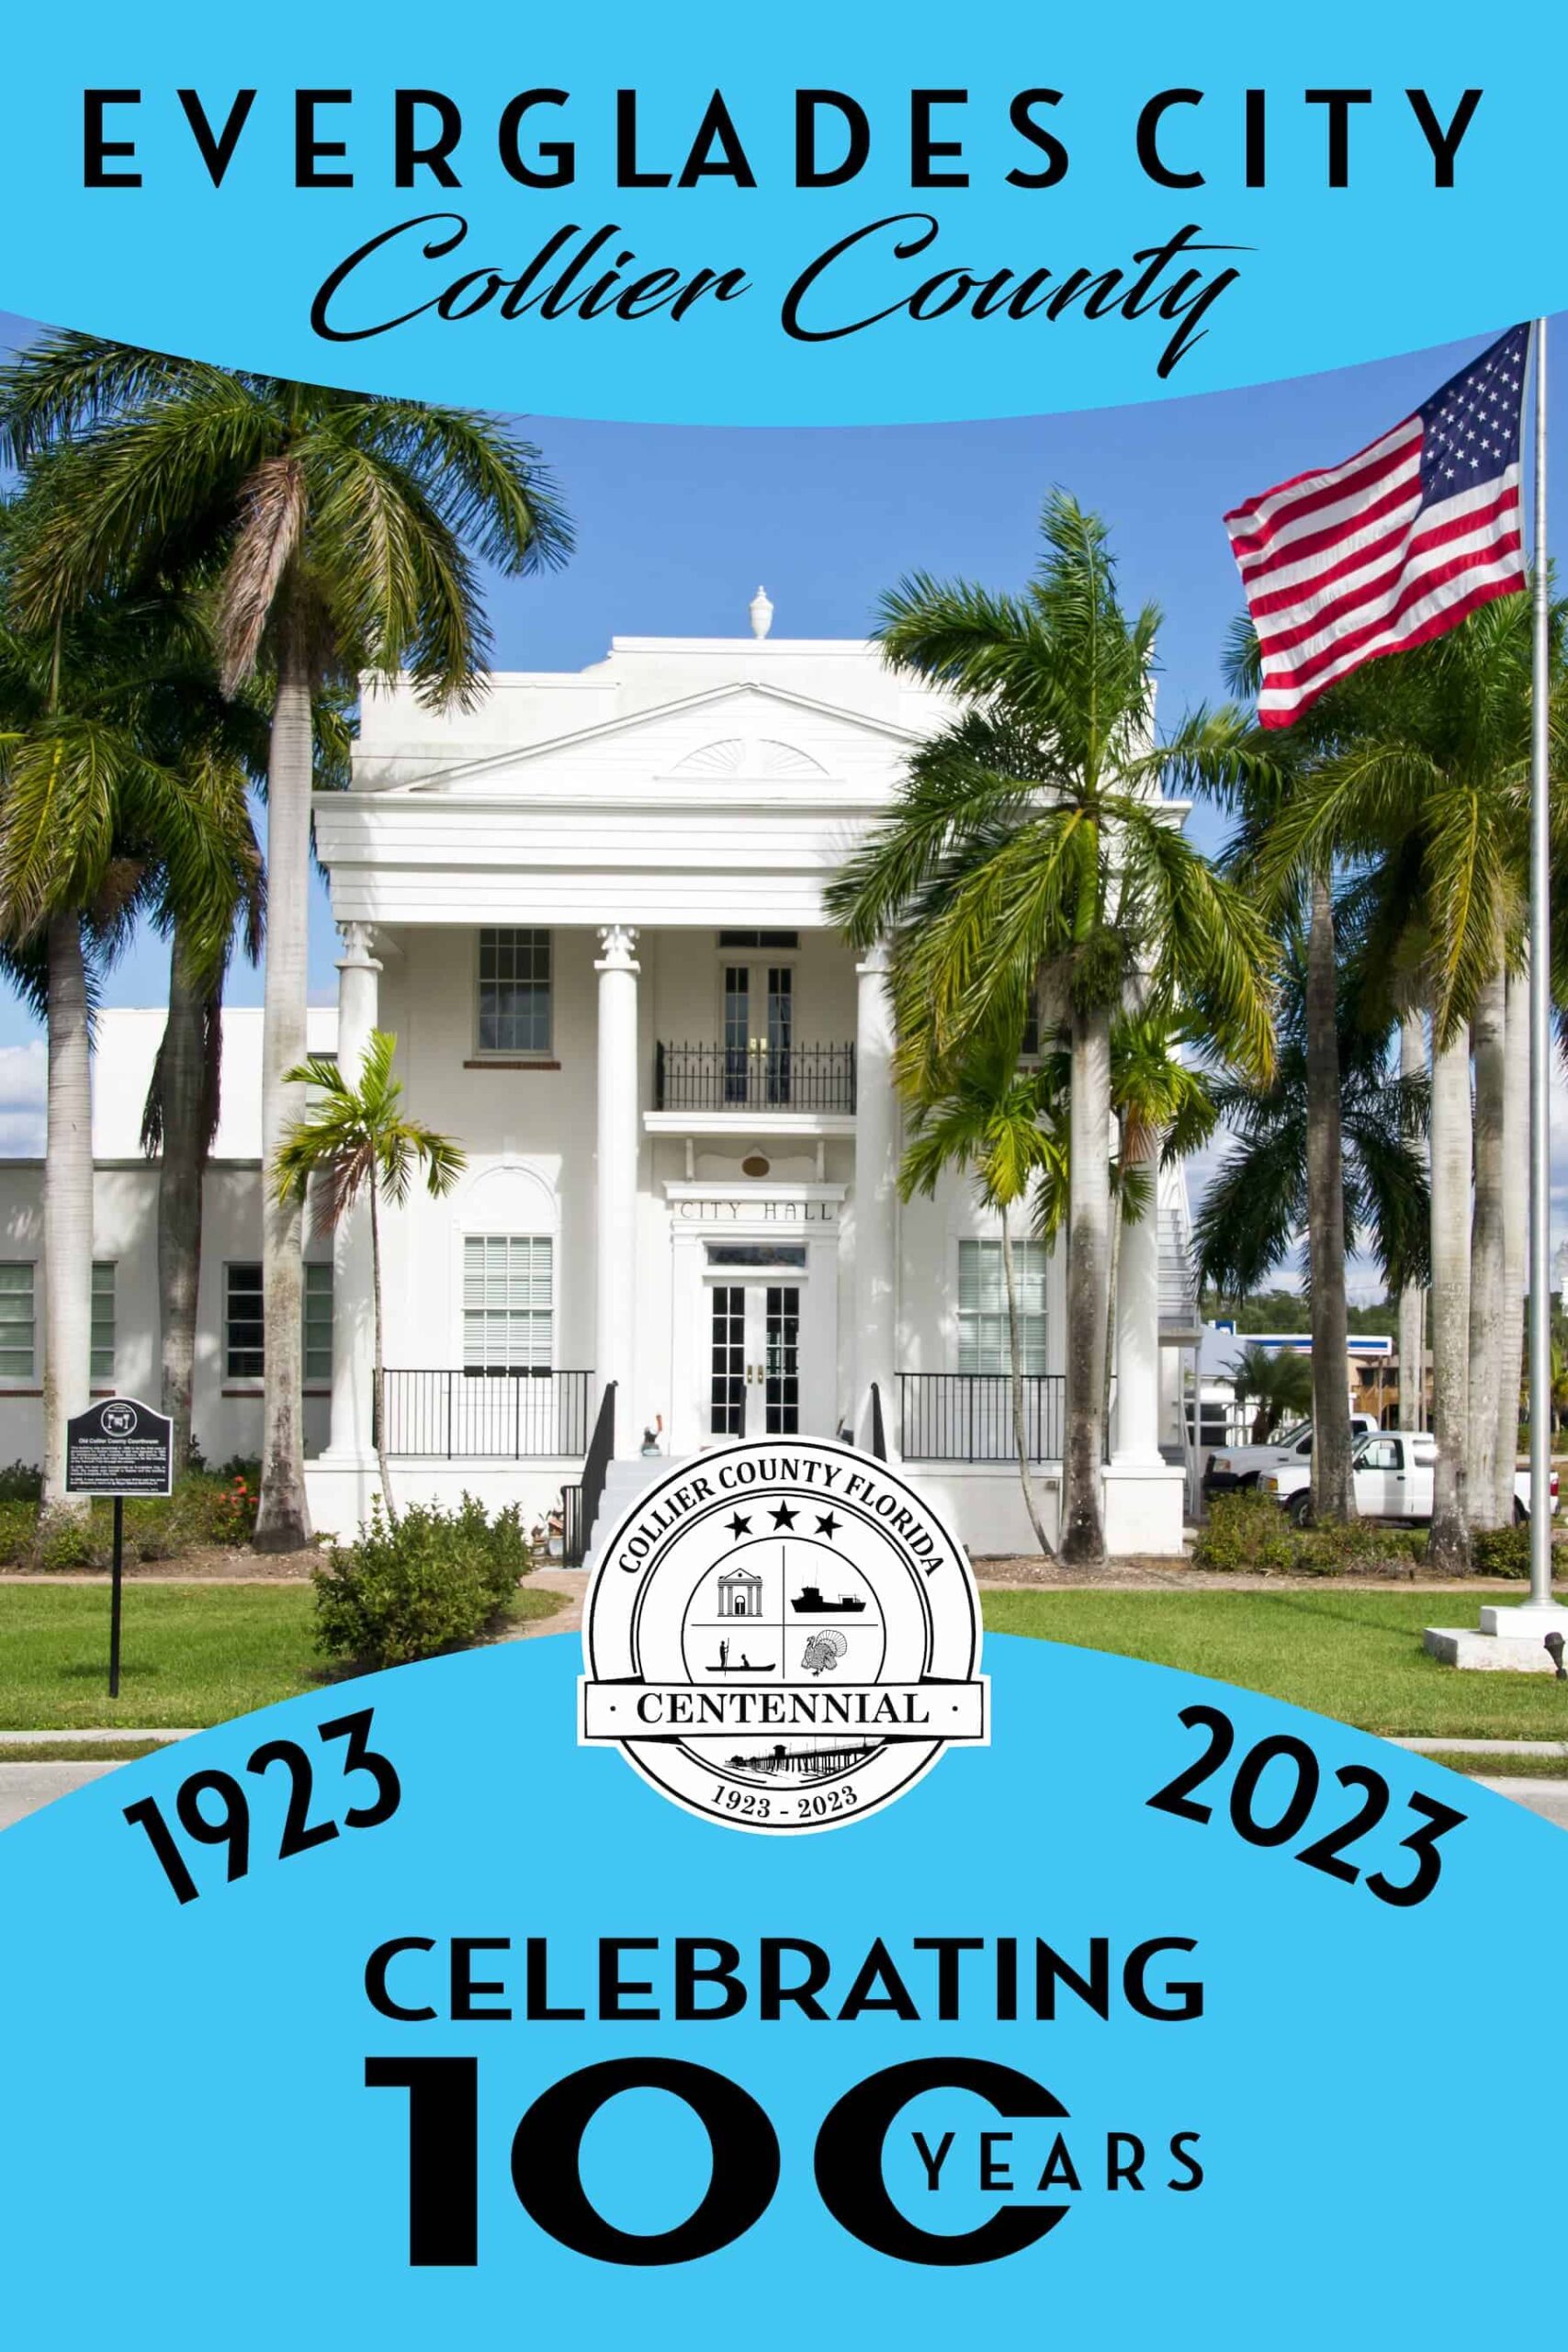 Celebrating 100 years - City Hall Everglades City